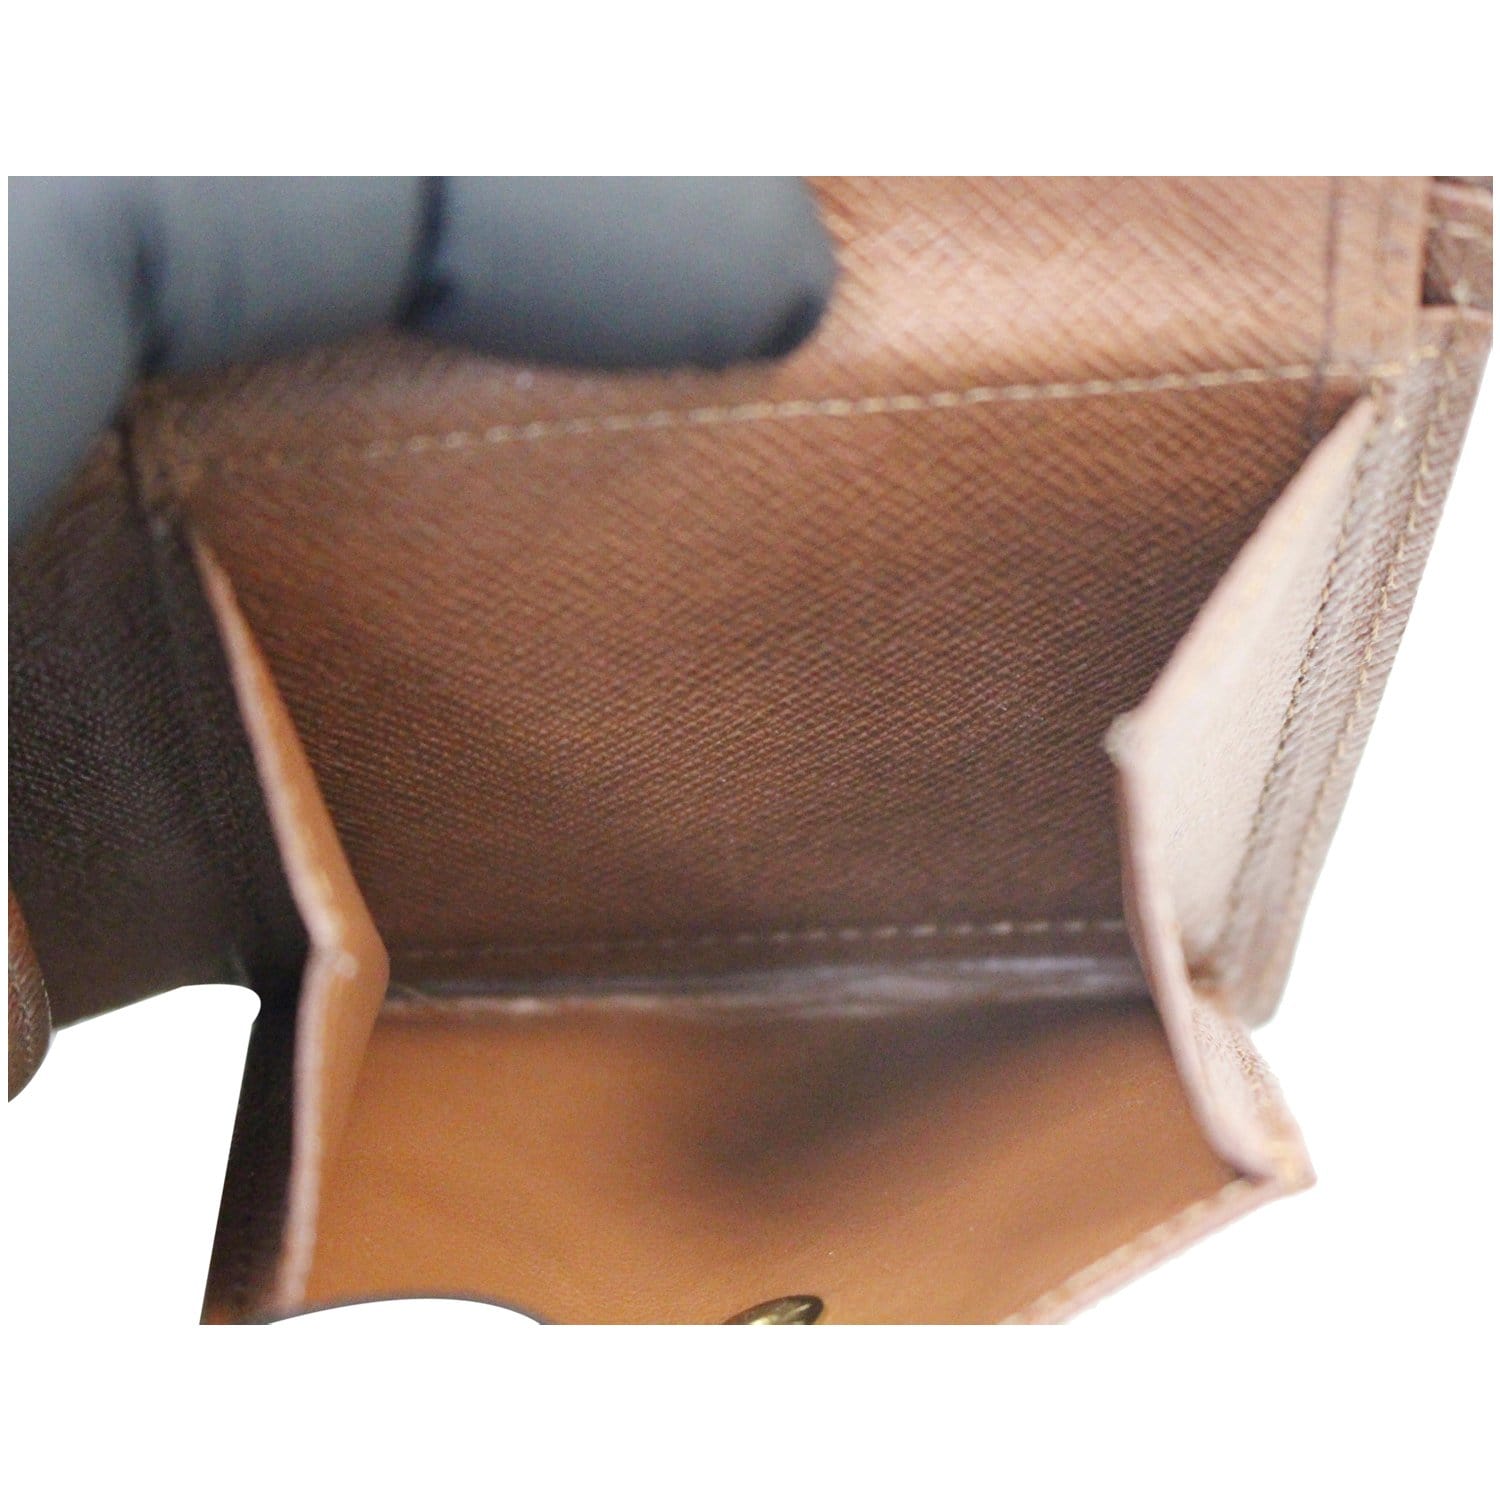 marco wallet brown